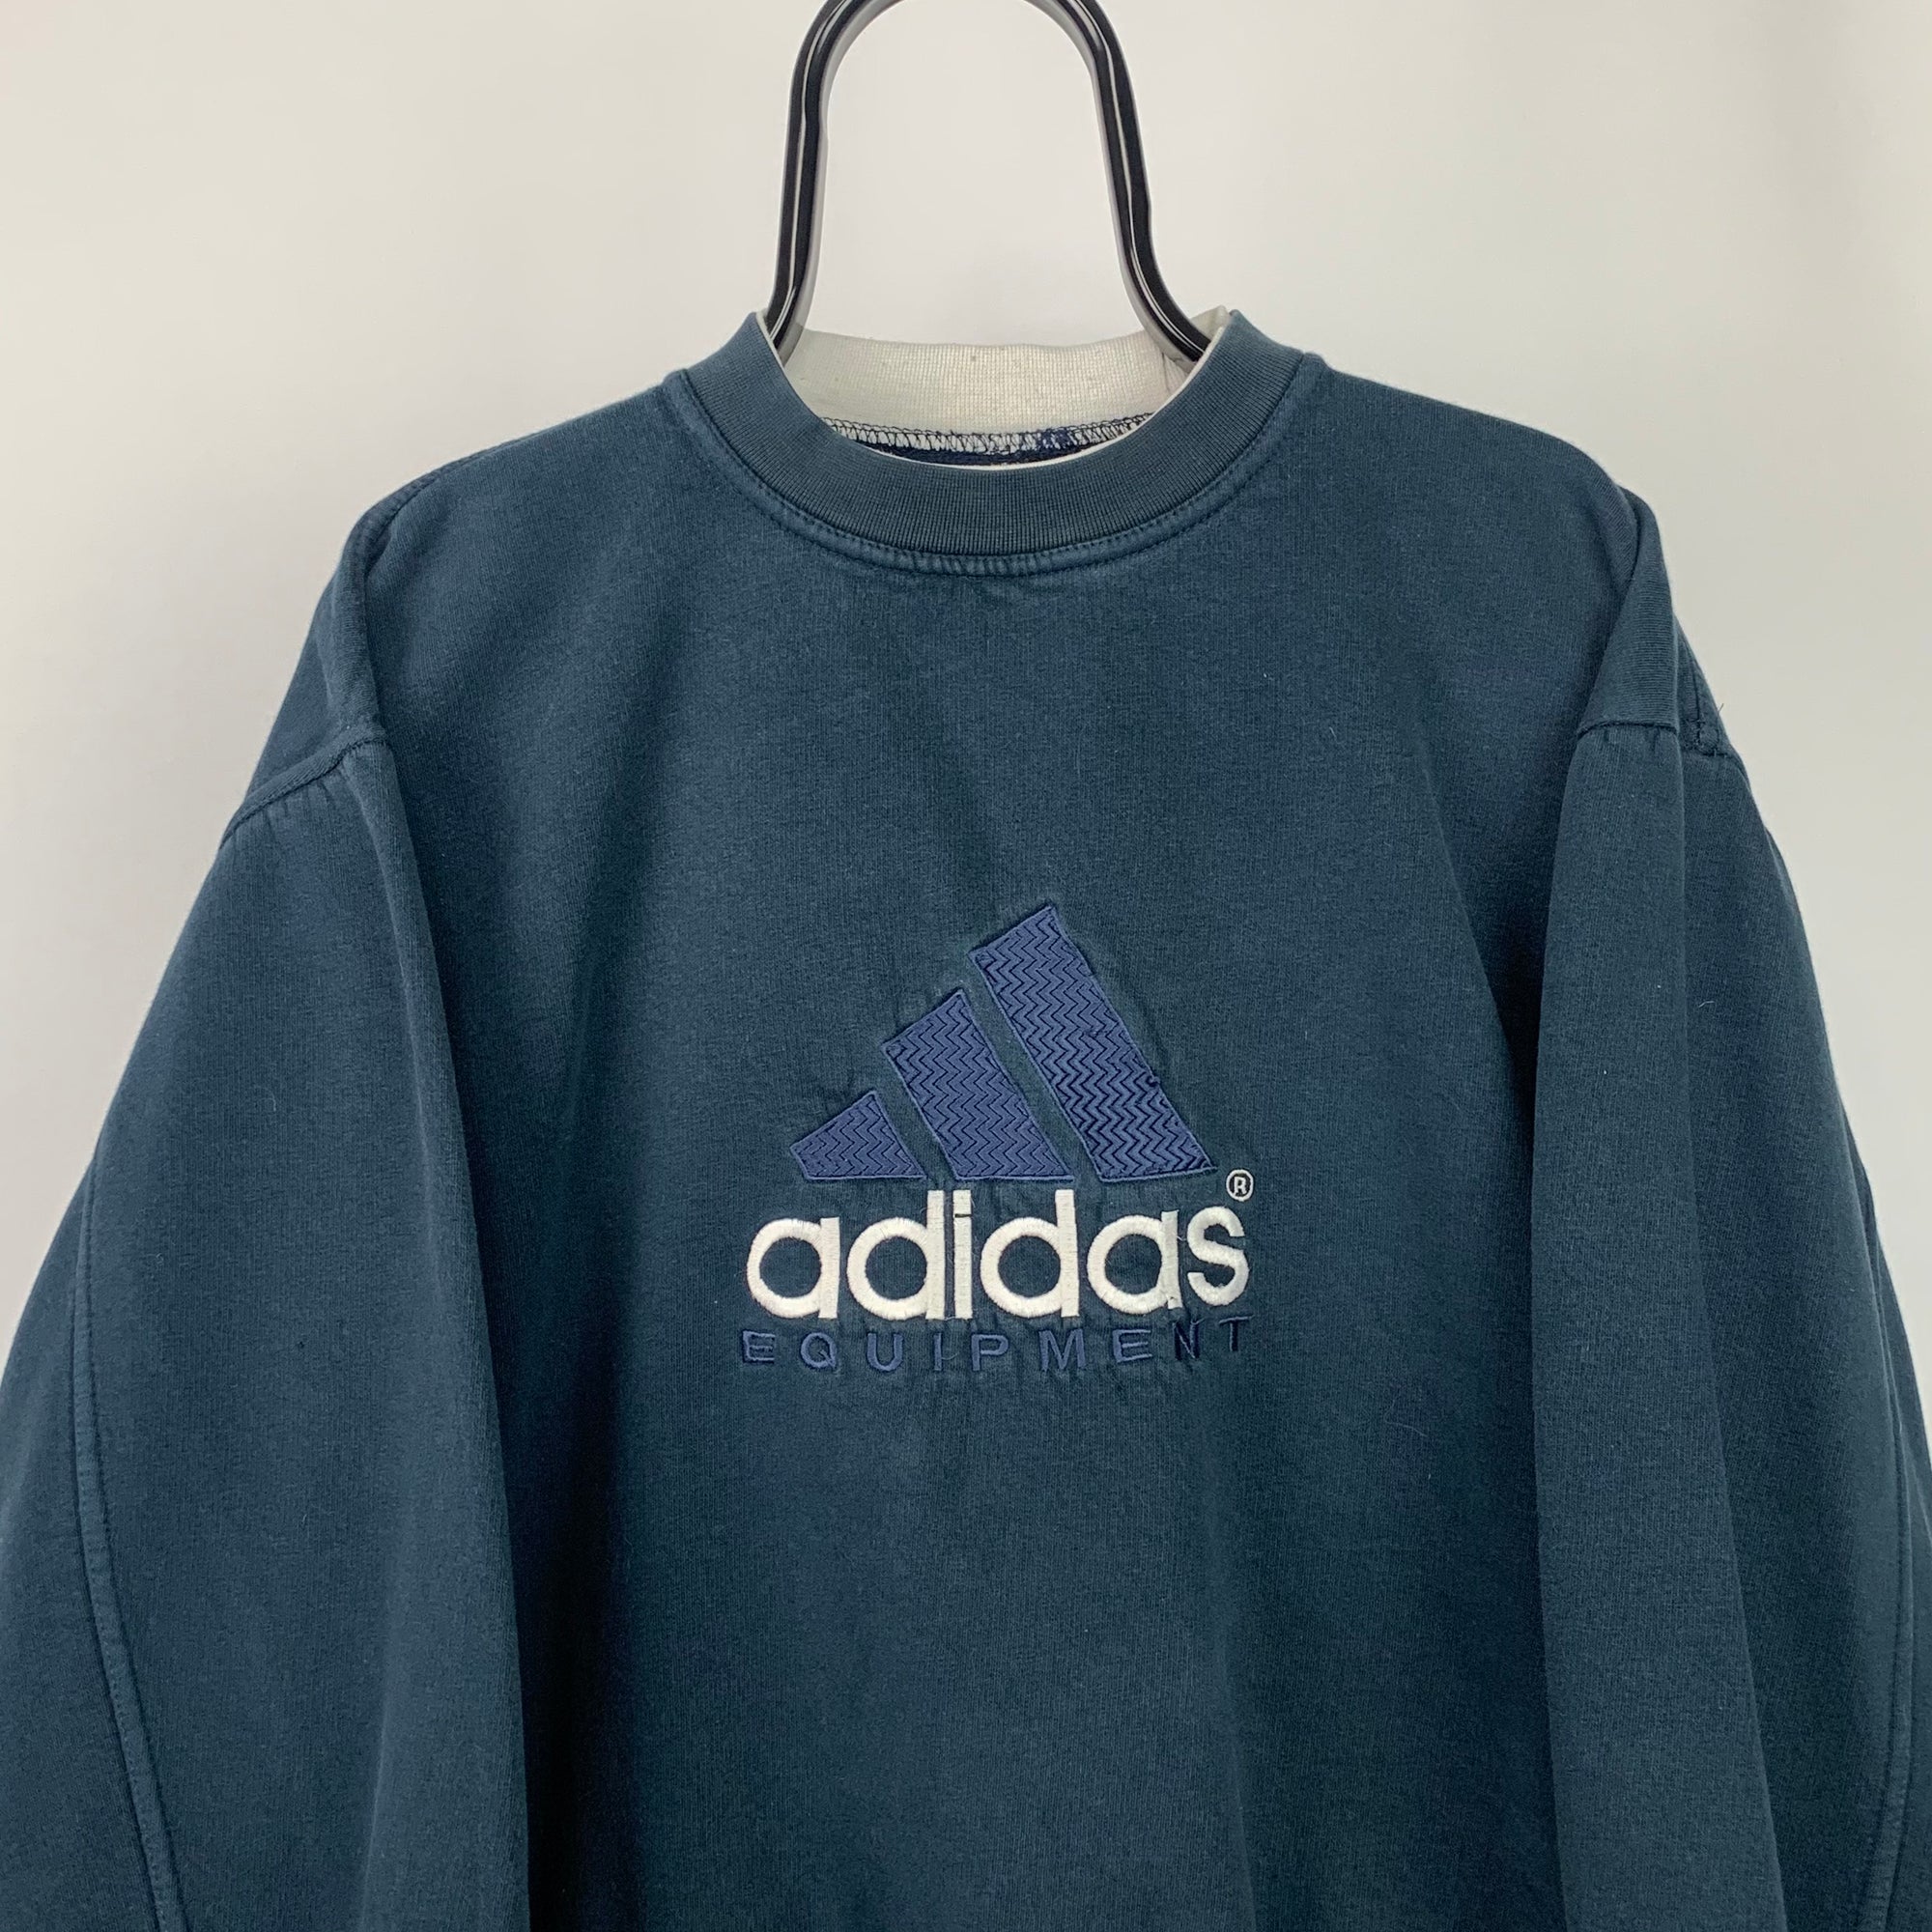 Vintage 90s Adidas Equipment Sweatshirt in Navy - Men's Small/Women's Medium